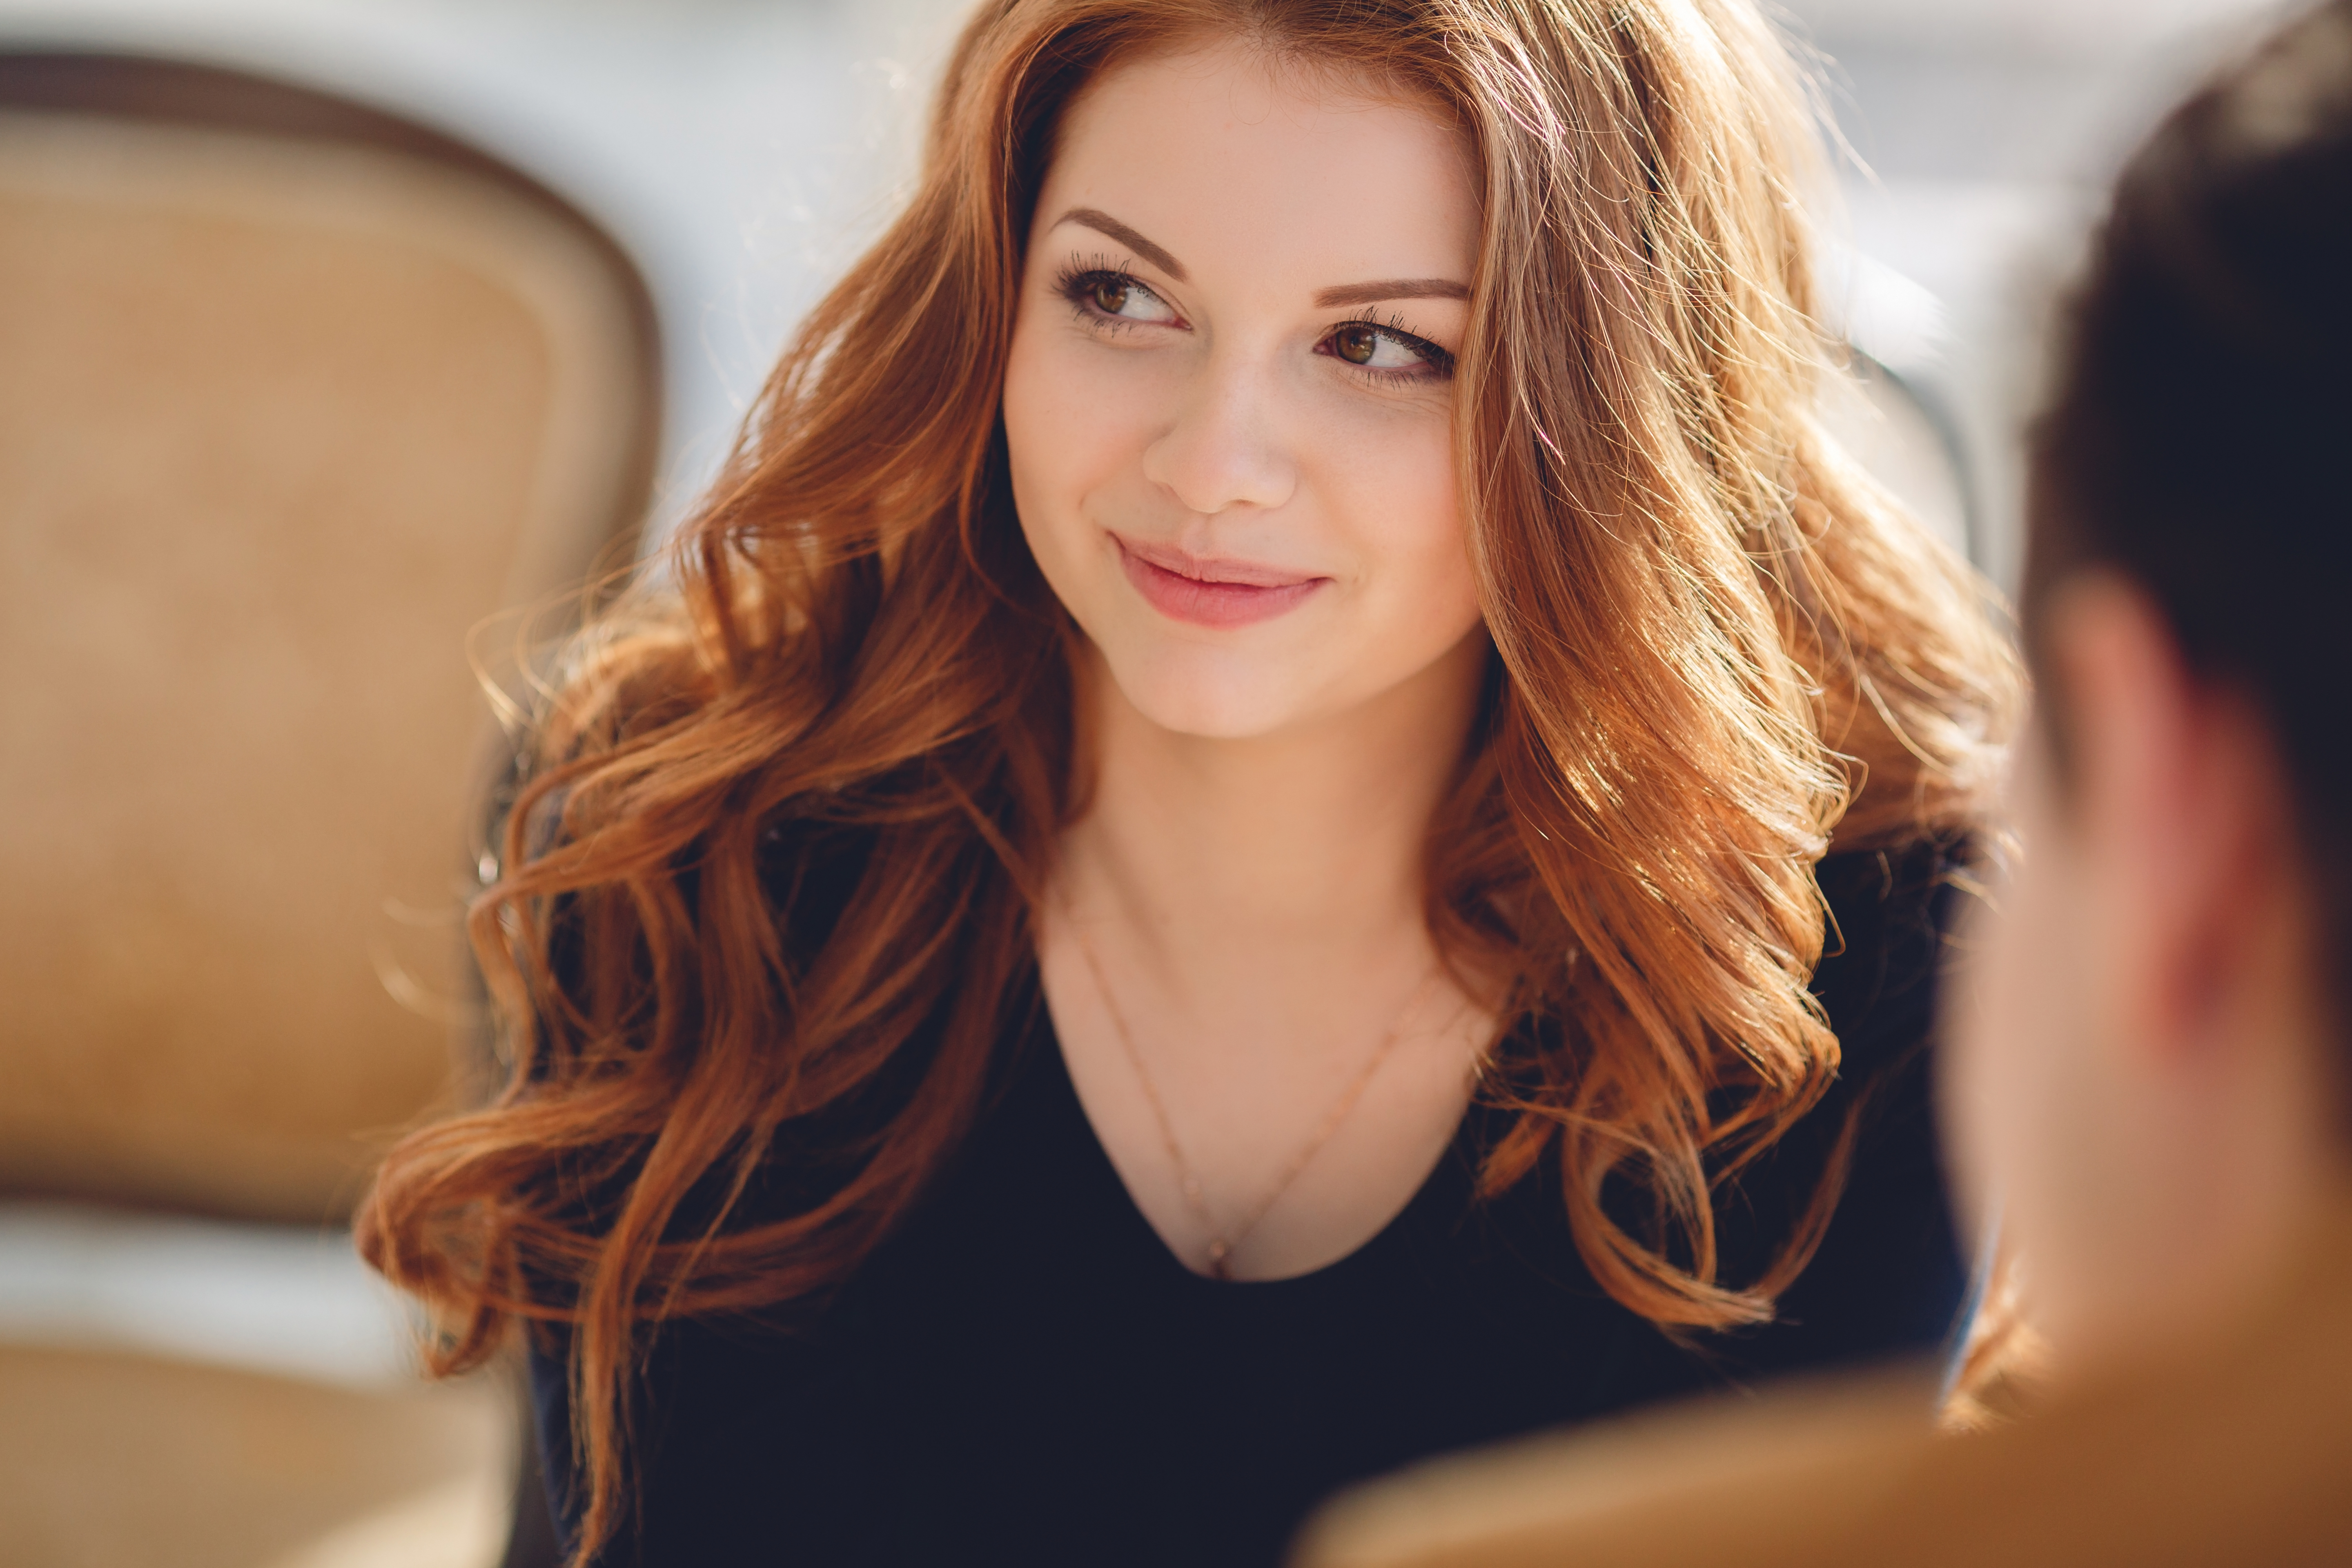 Gorgeous brunette | Source: Shutterstock